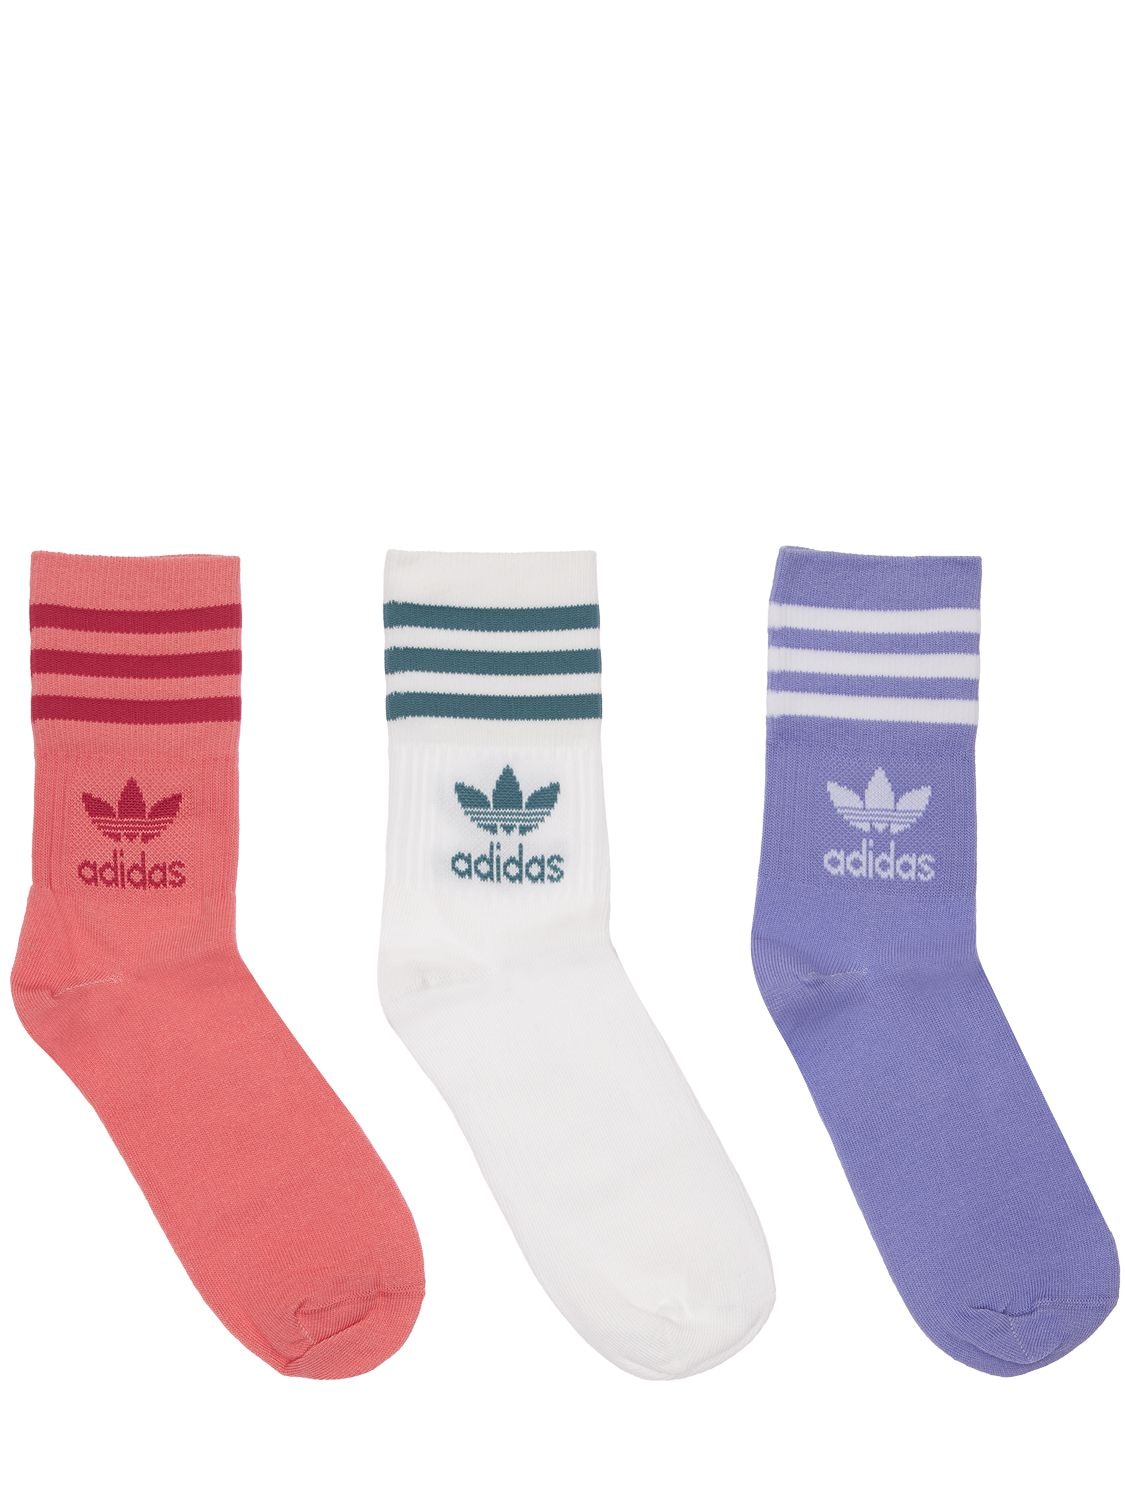 Adidas Originals Mid Cut Crew Socks In Pink,lilac,whi